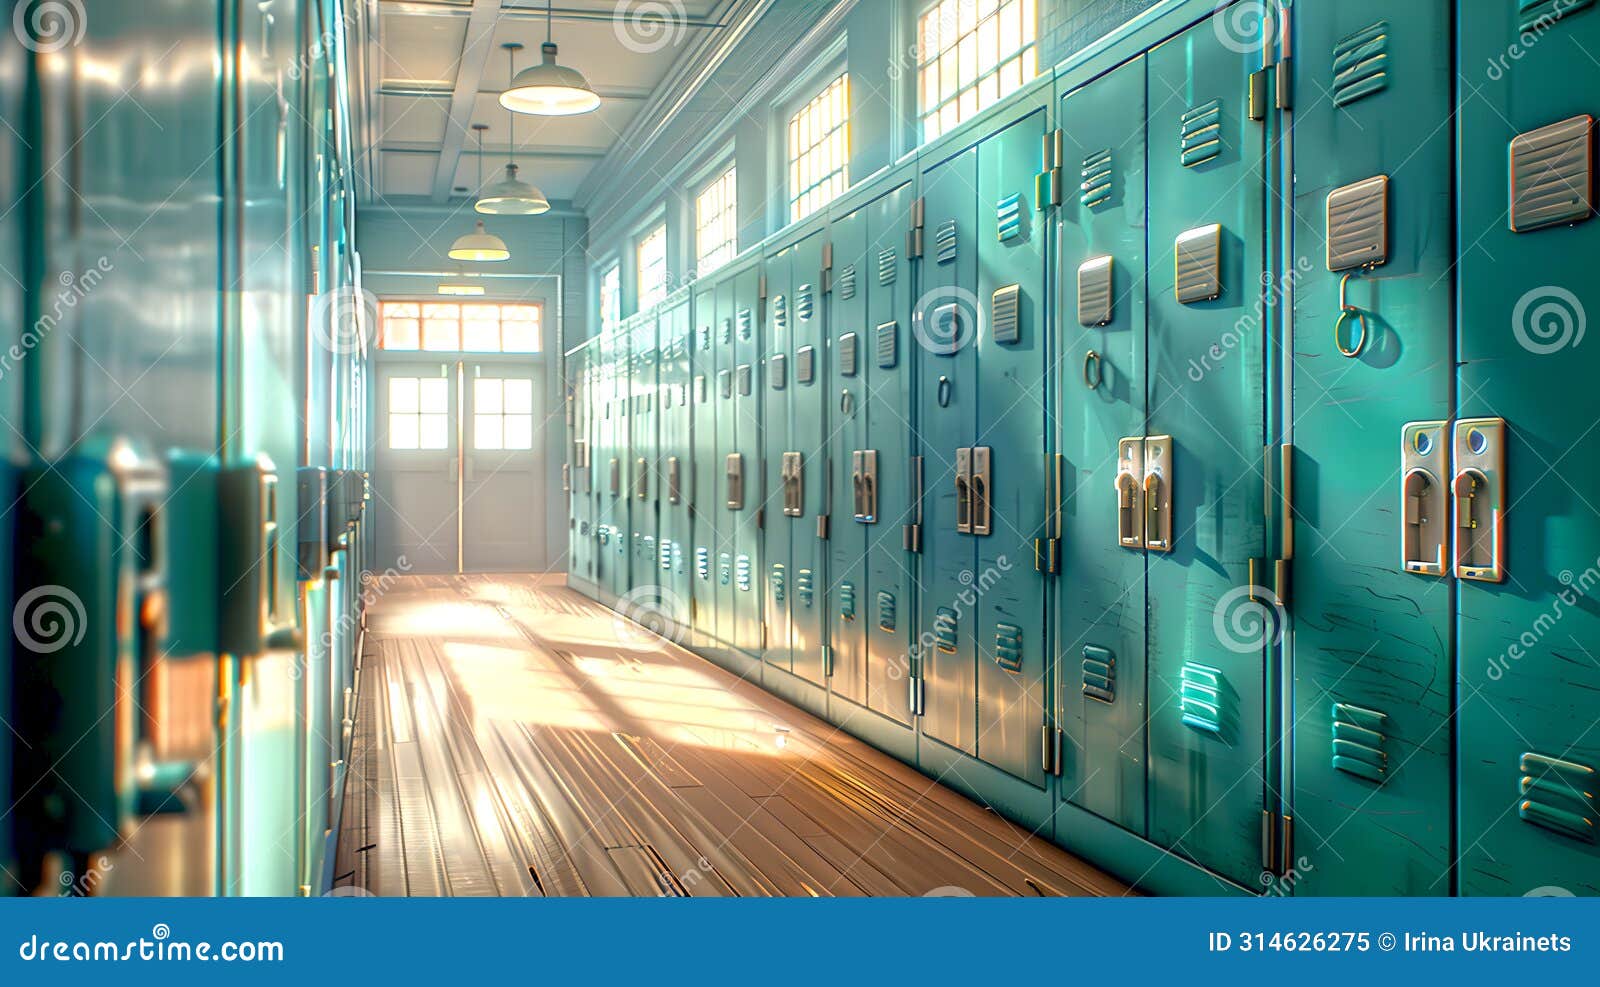 empty sunlit school corridor with rows of blue lockers. quiet educational ambience. high school hallway during off hours